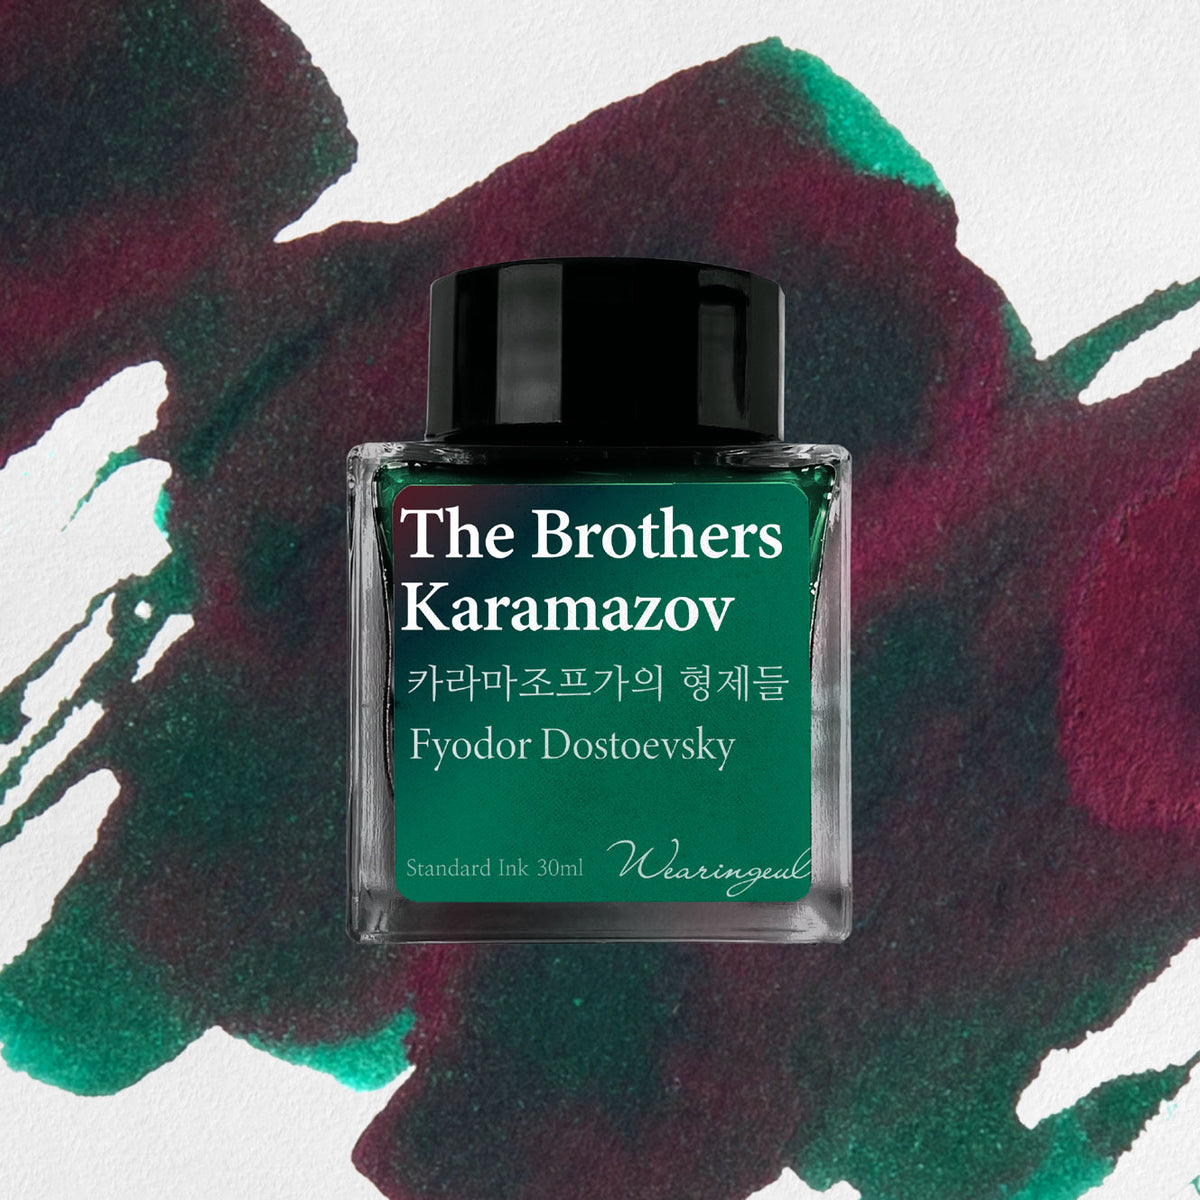 Wearingeul - Fountain Pen Ink - The Brothers Karamazov